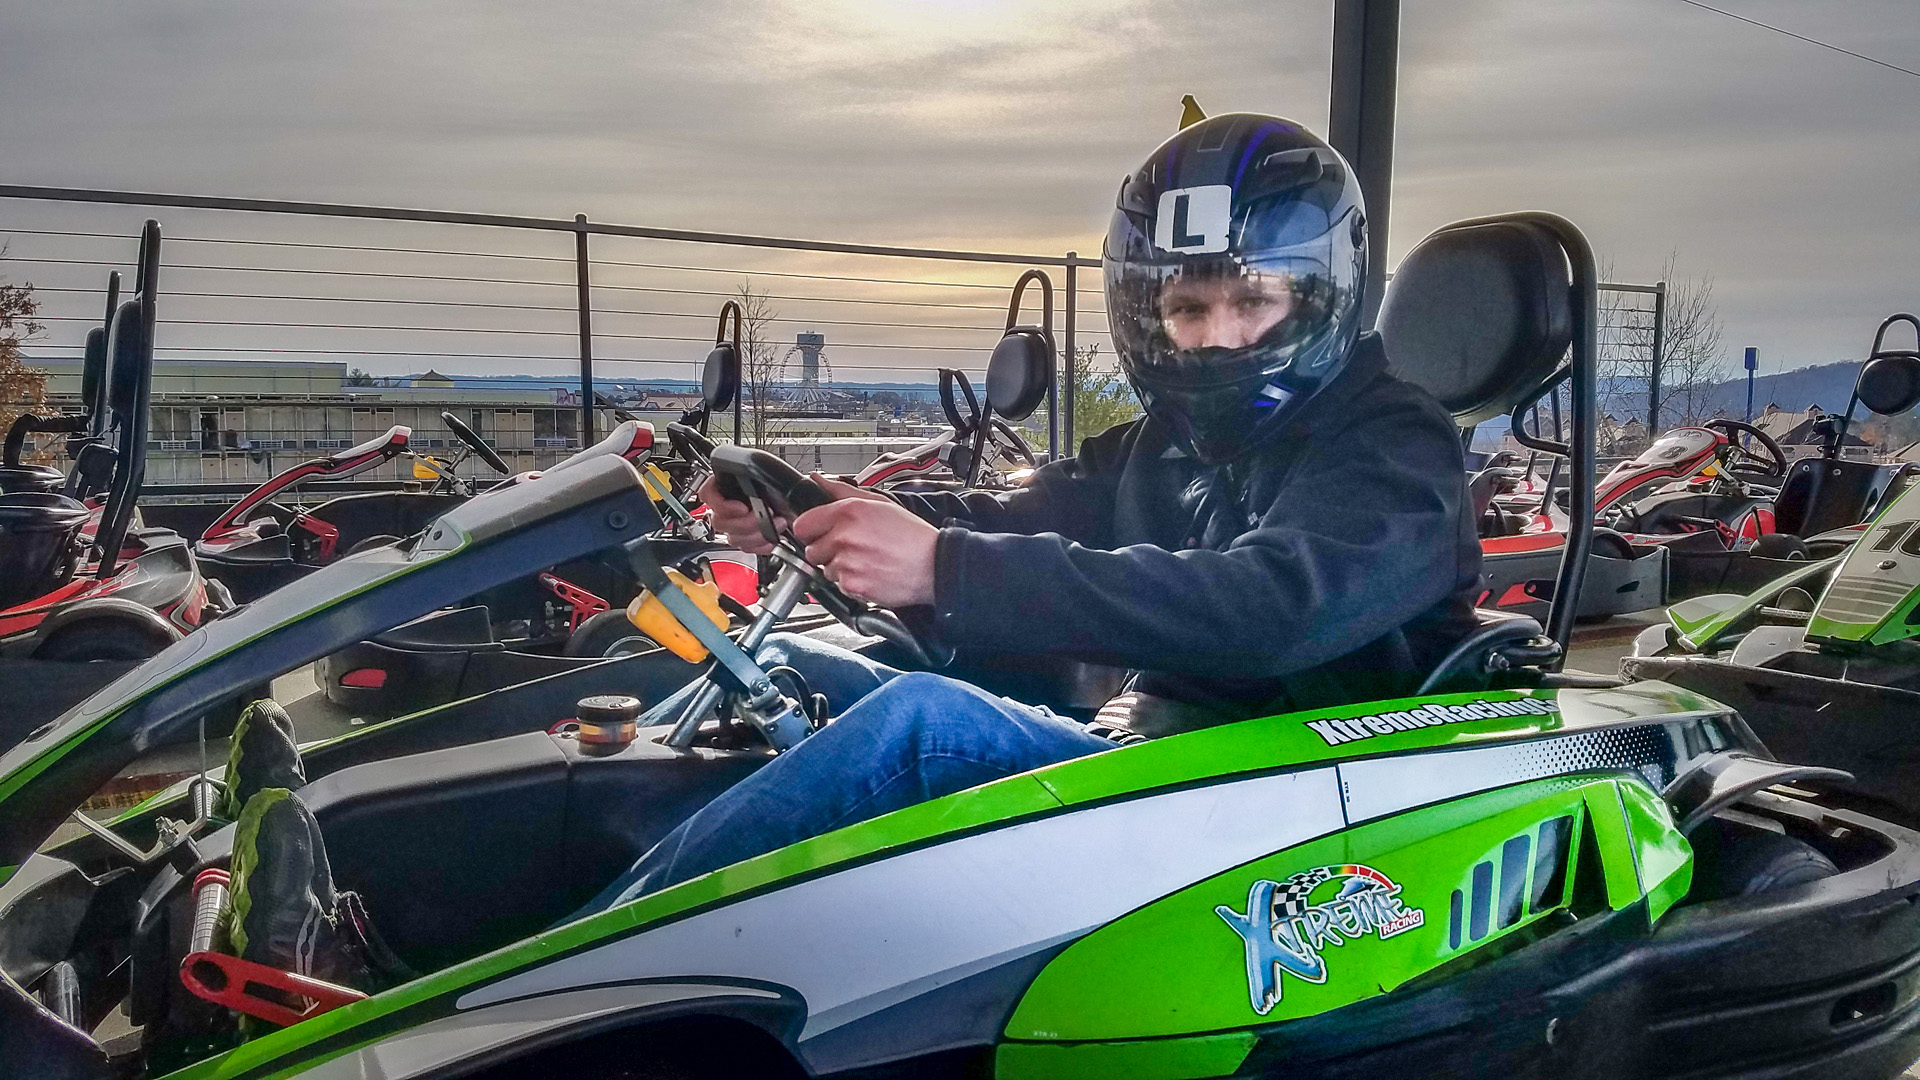 Fast and Fun Go-Kart Racing at Branson Tracks in Branson, Missouri